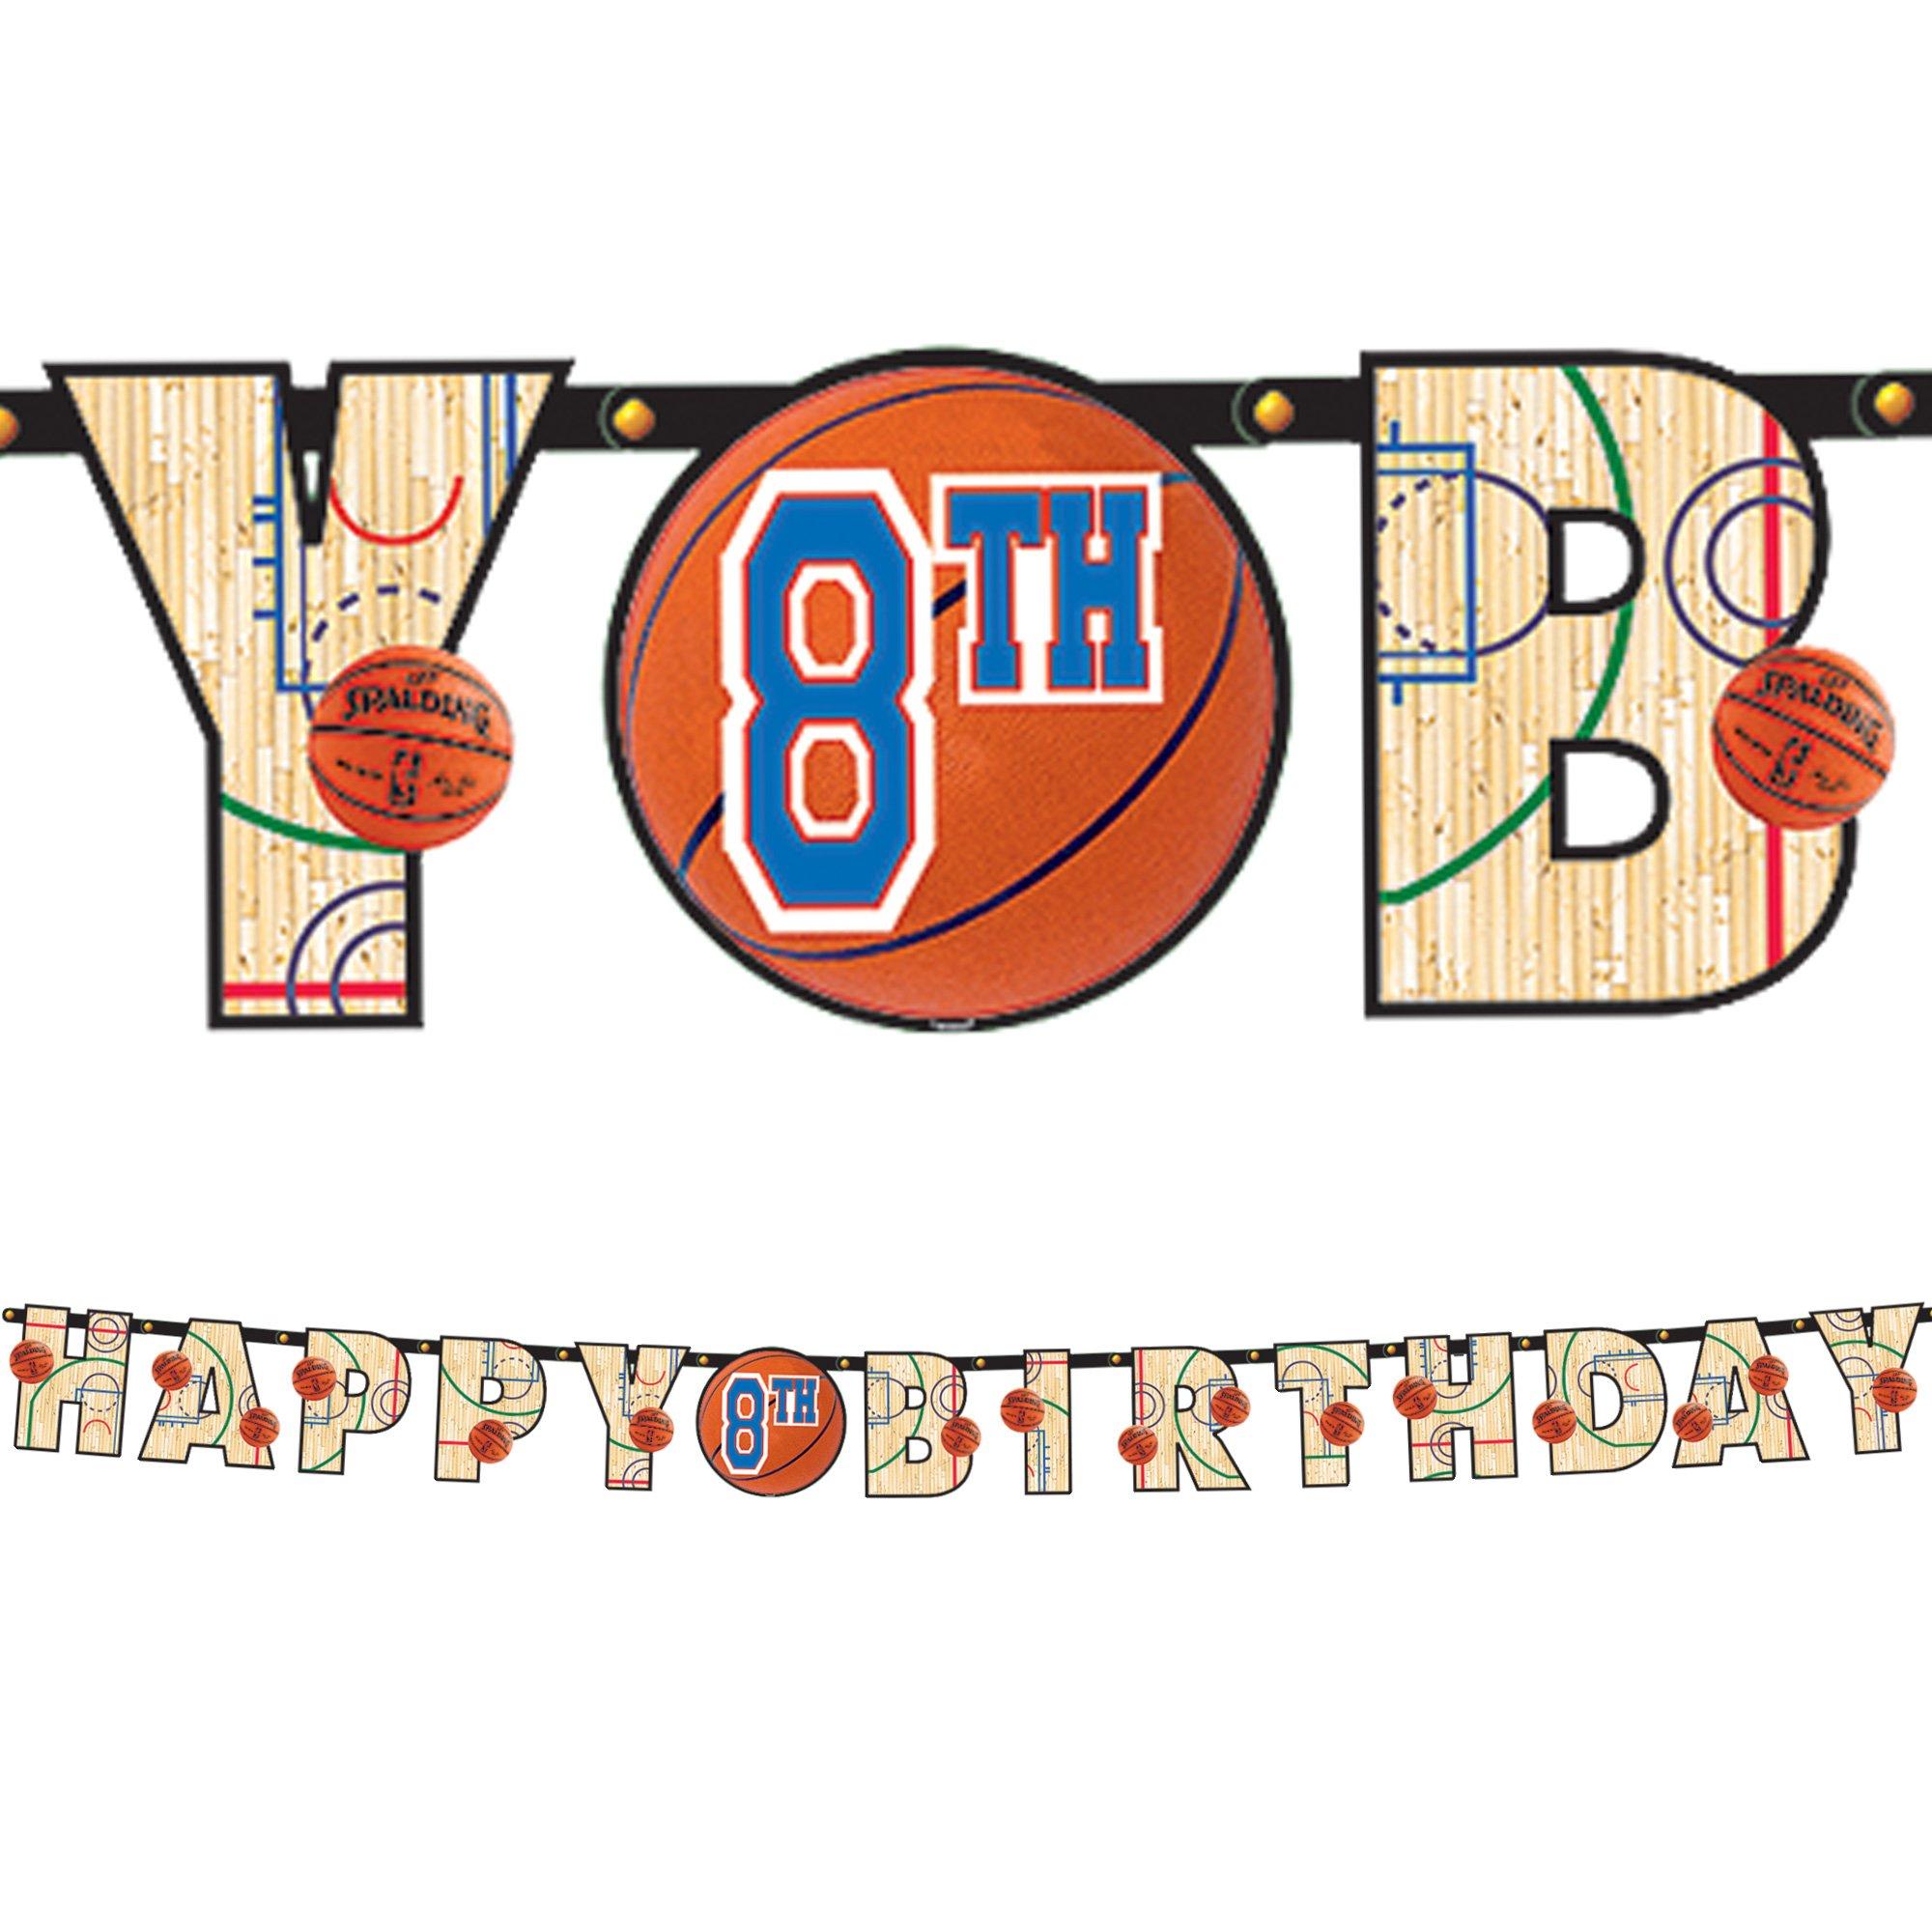 NBA Basketball Theme Party Decoration Set Kids Baby Birthday Party